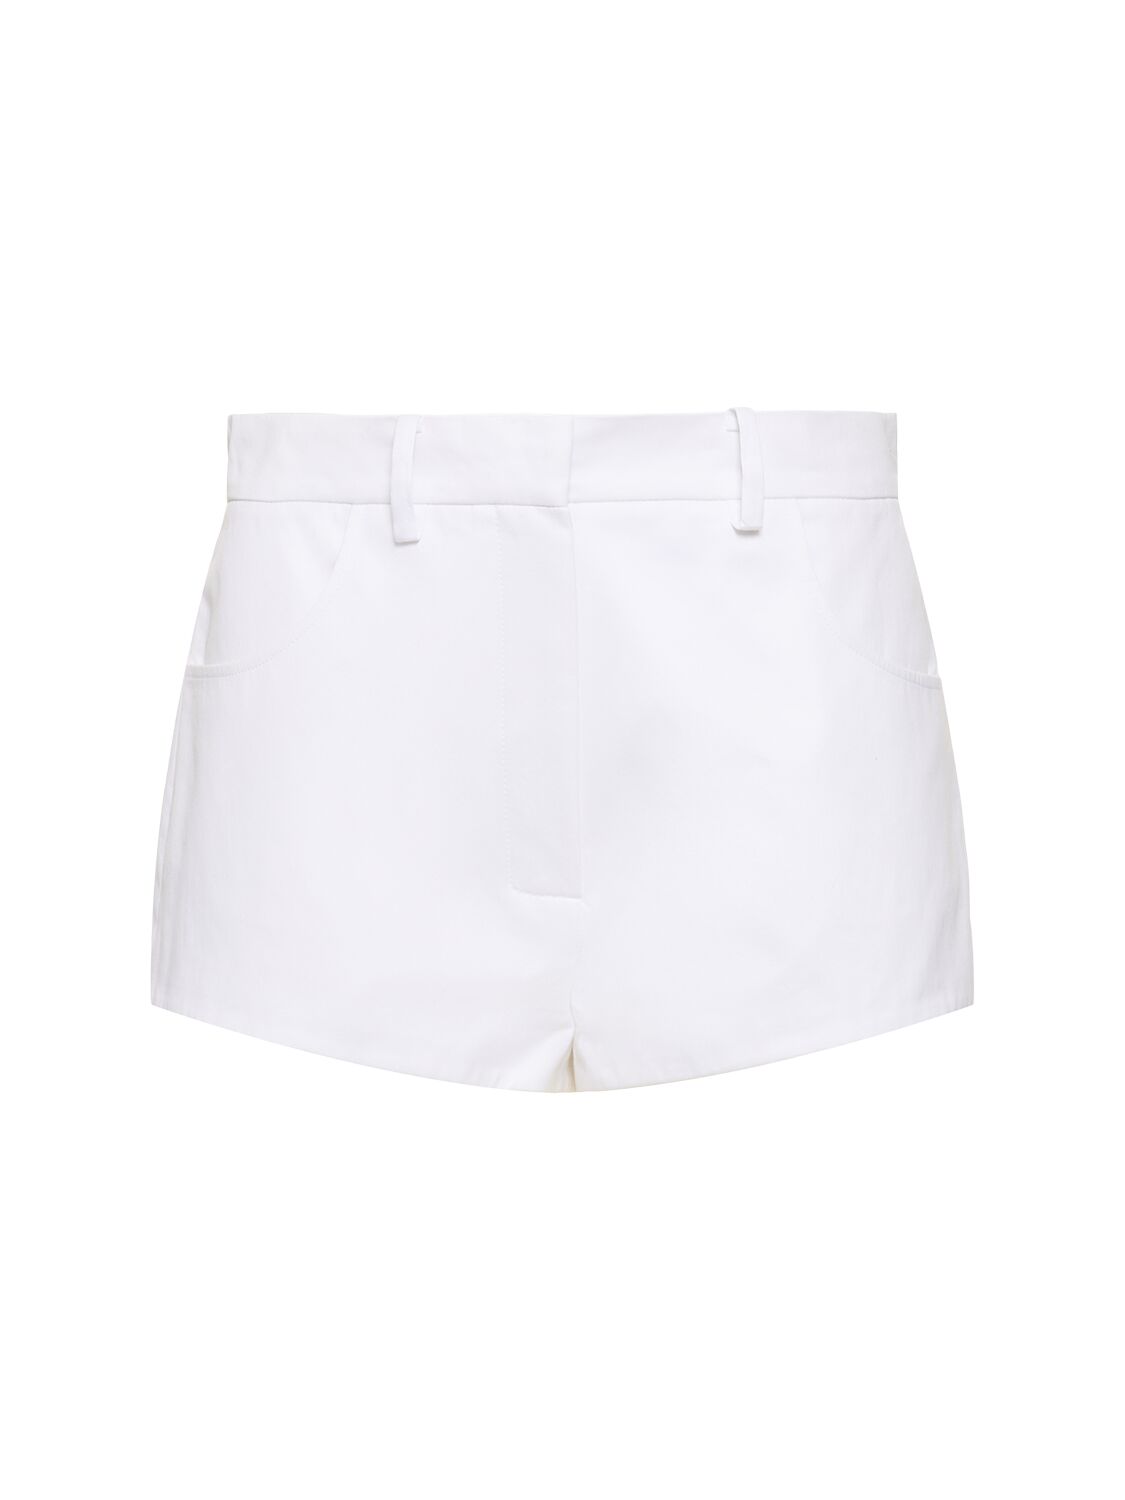 Image of Cotton Shorts